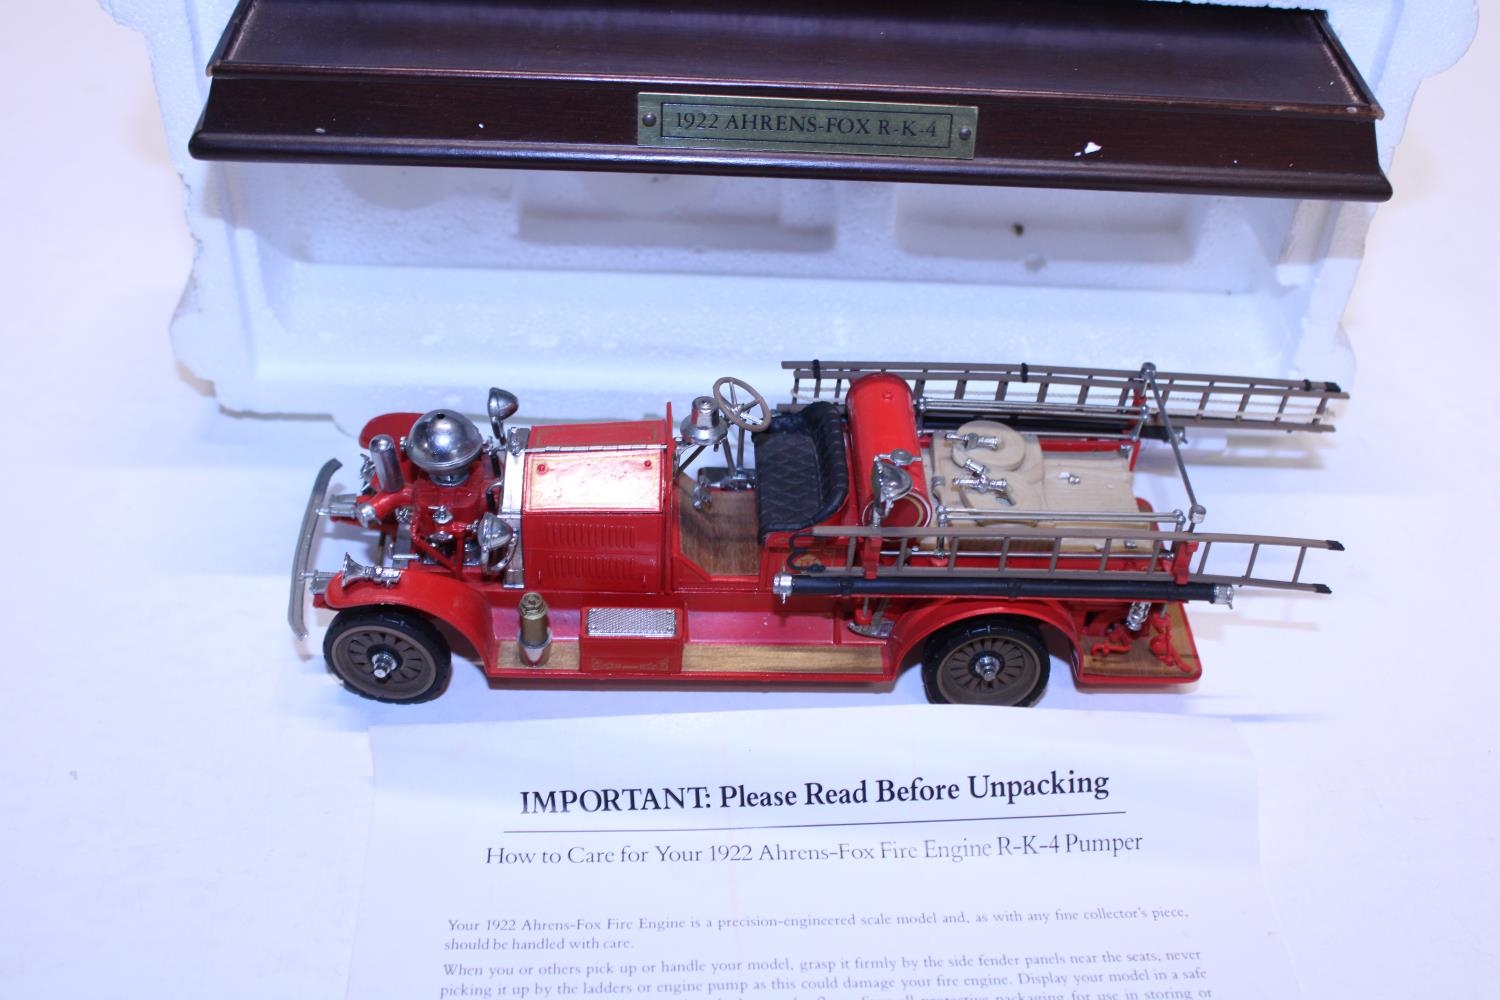 A 1990 boxed Franklin Mint die-cast model "The 1922 Ahrens-Fox R-K-4 Pumper